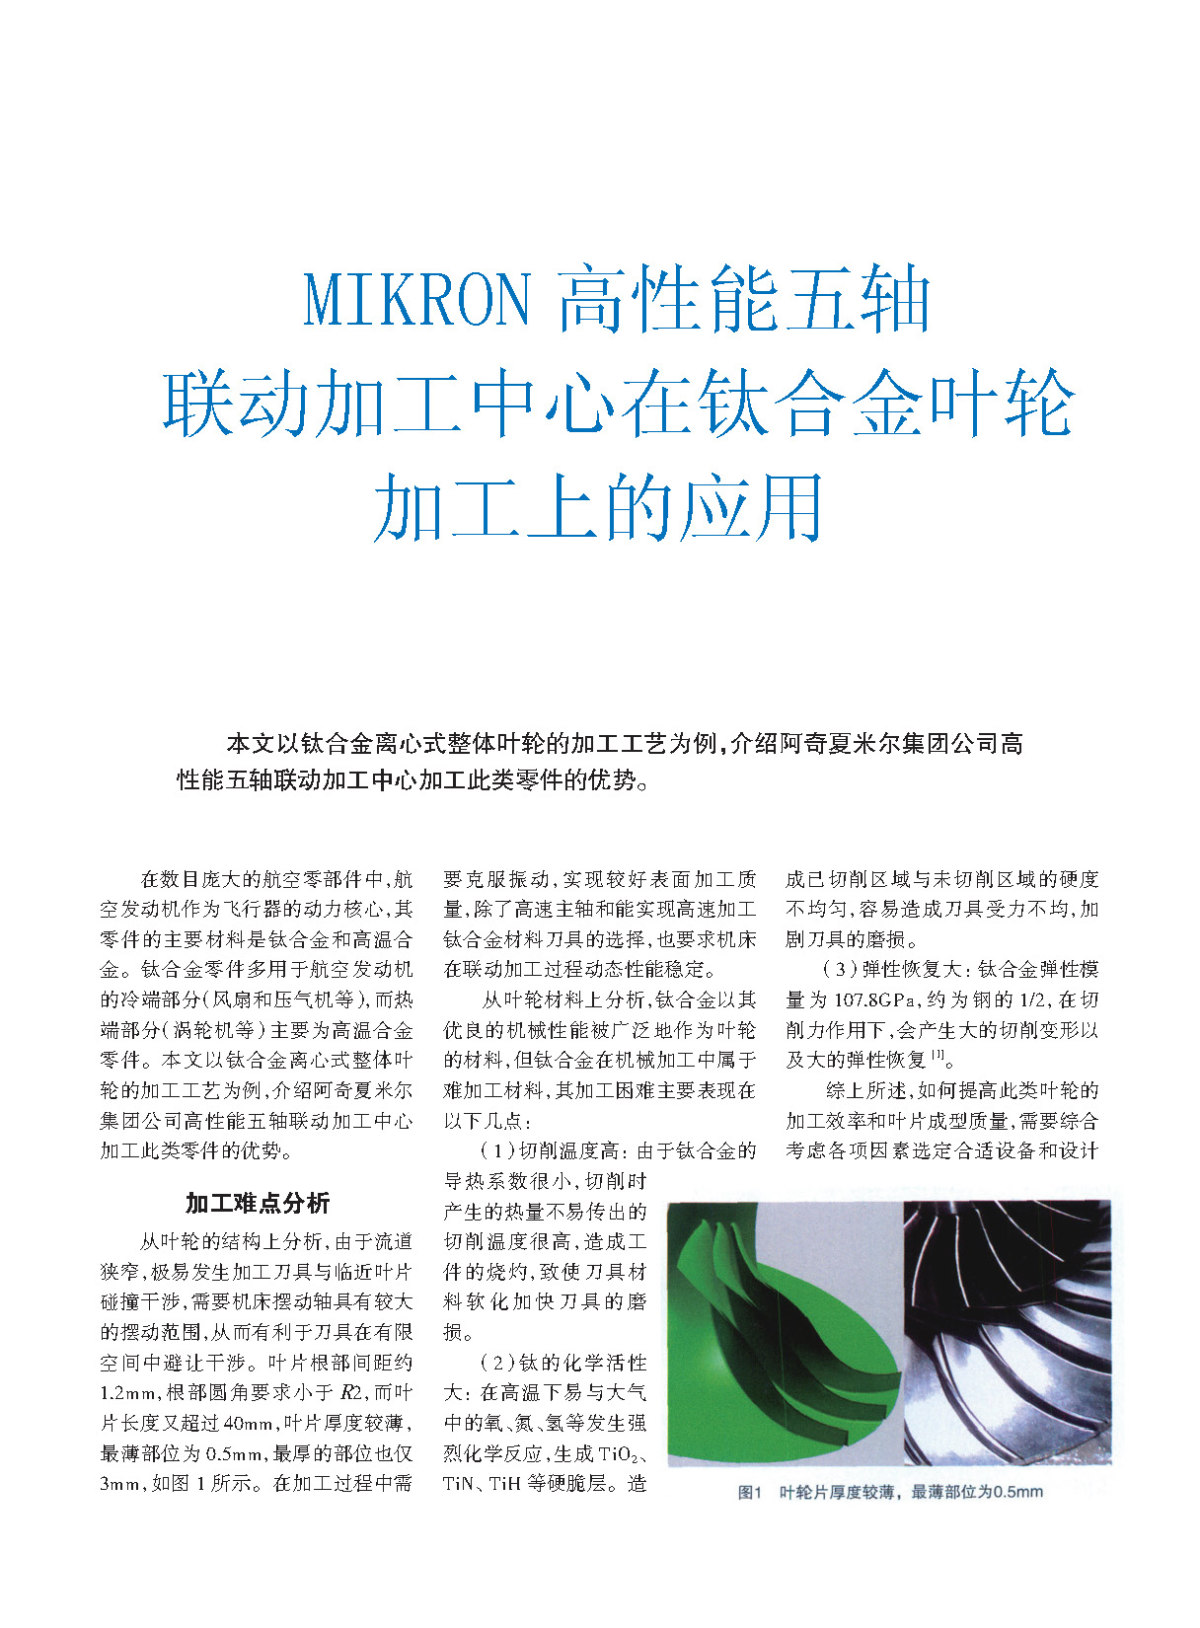 MIKRON高性能五轴联动加工中心在钛合金叶轮加工上的应用_页面_1.jpg